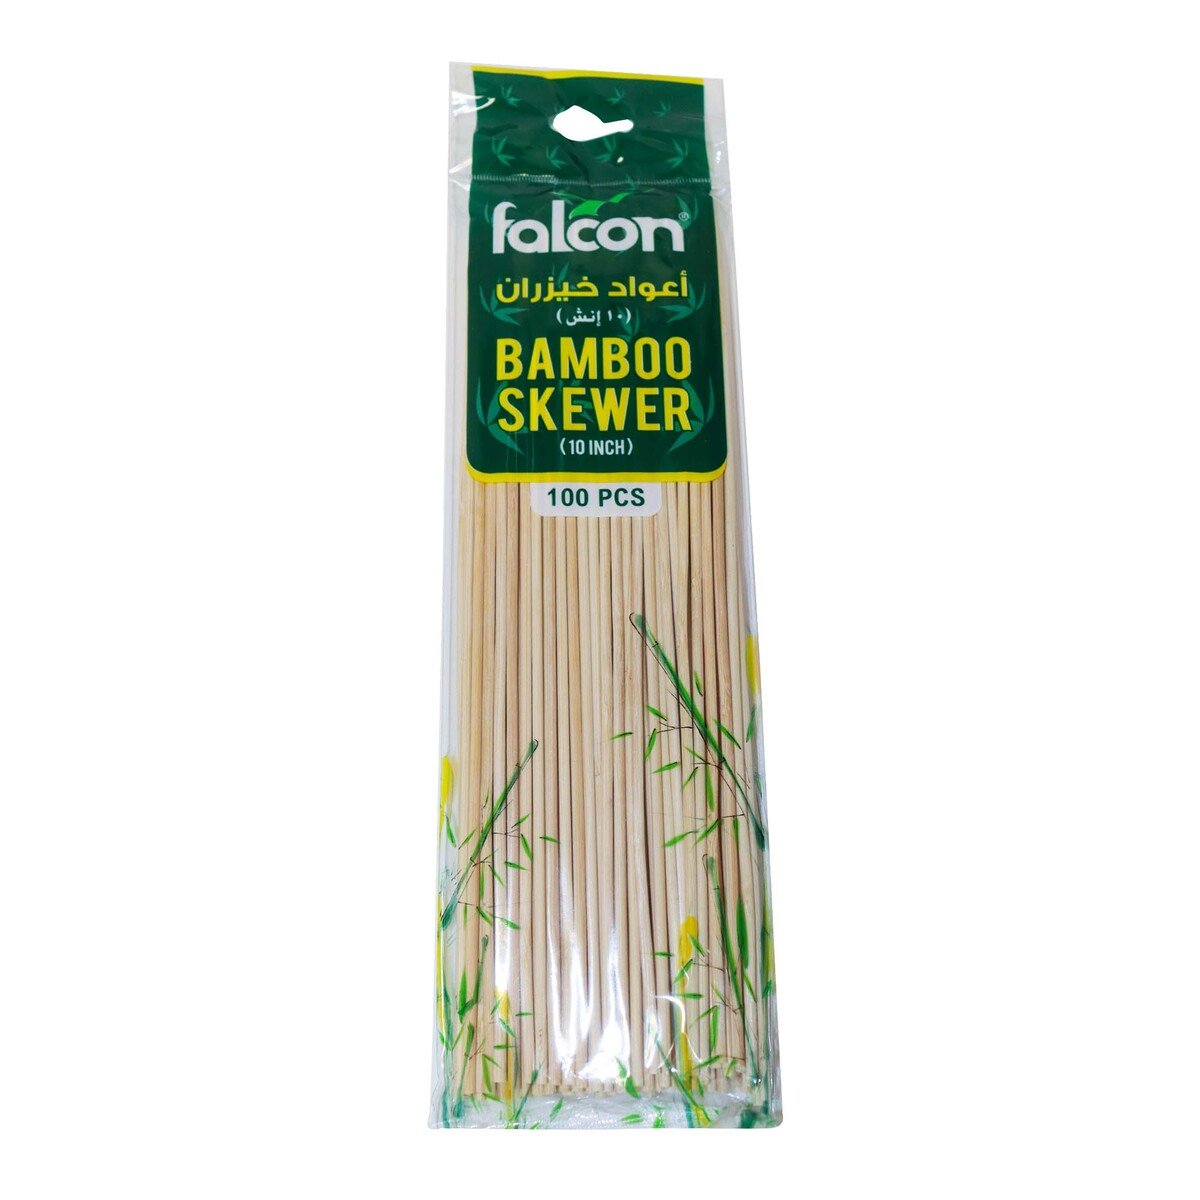 Falcon Bamboo Skewer 10inch 100pcs